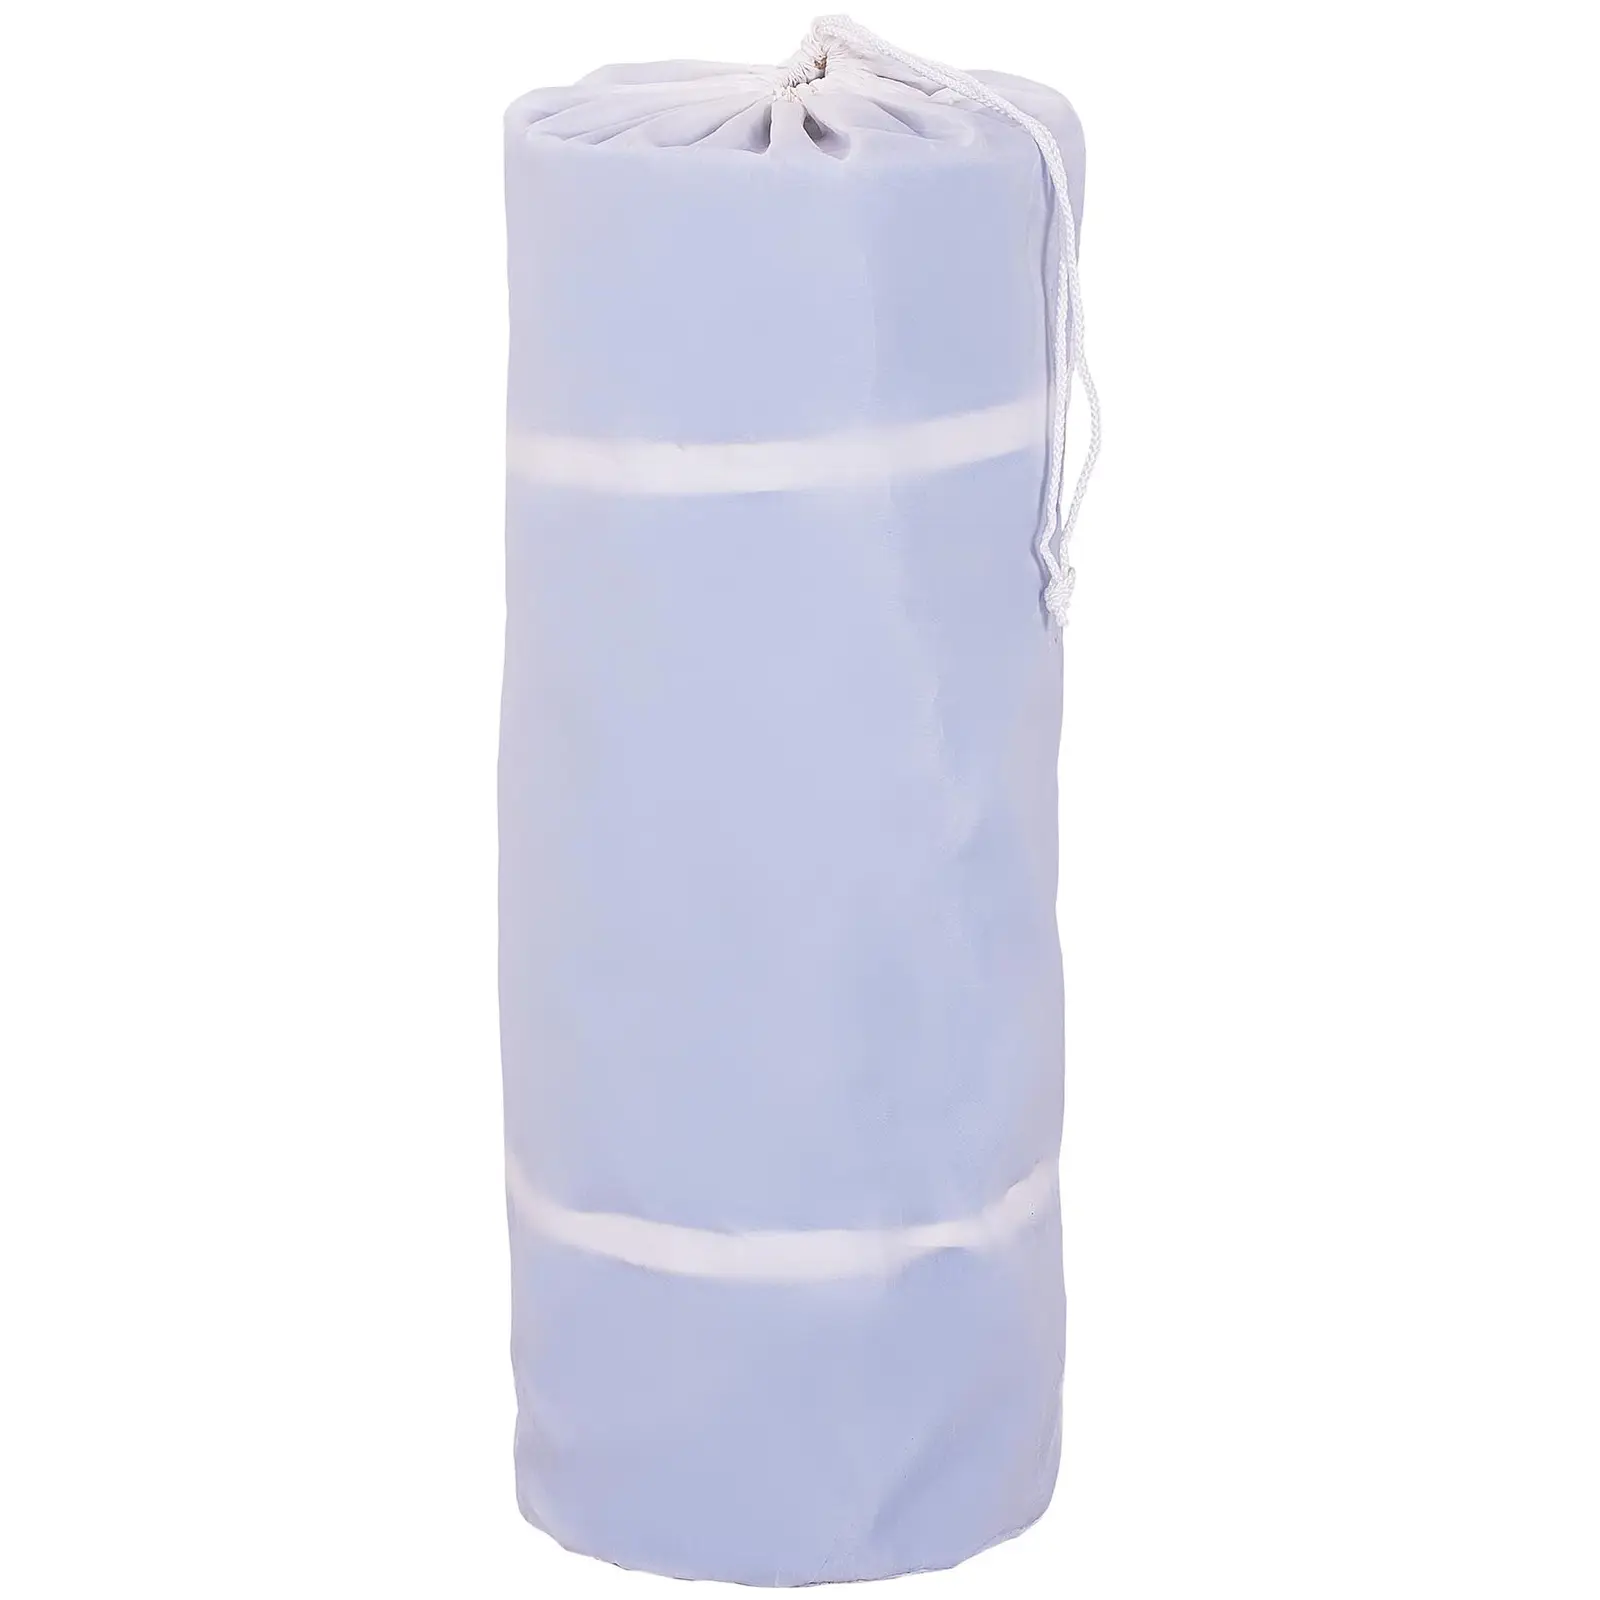 Nafukovací žíněnka - 300 x 100 x 20 cm - 150 kg - modrá/bílá